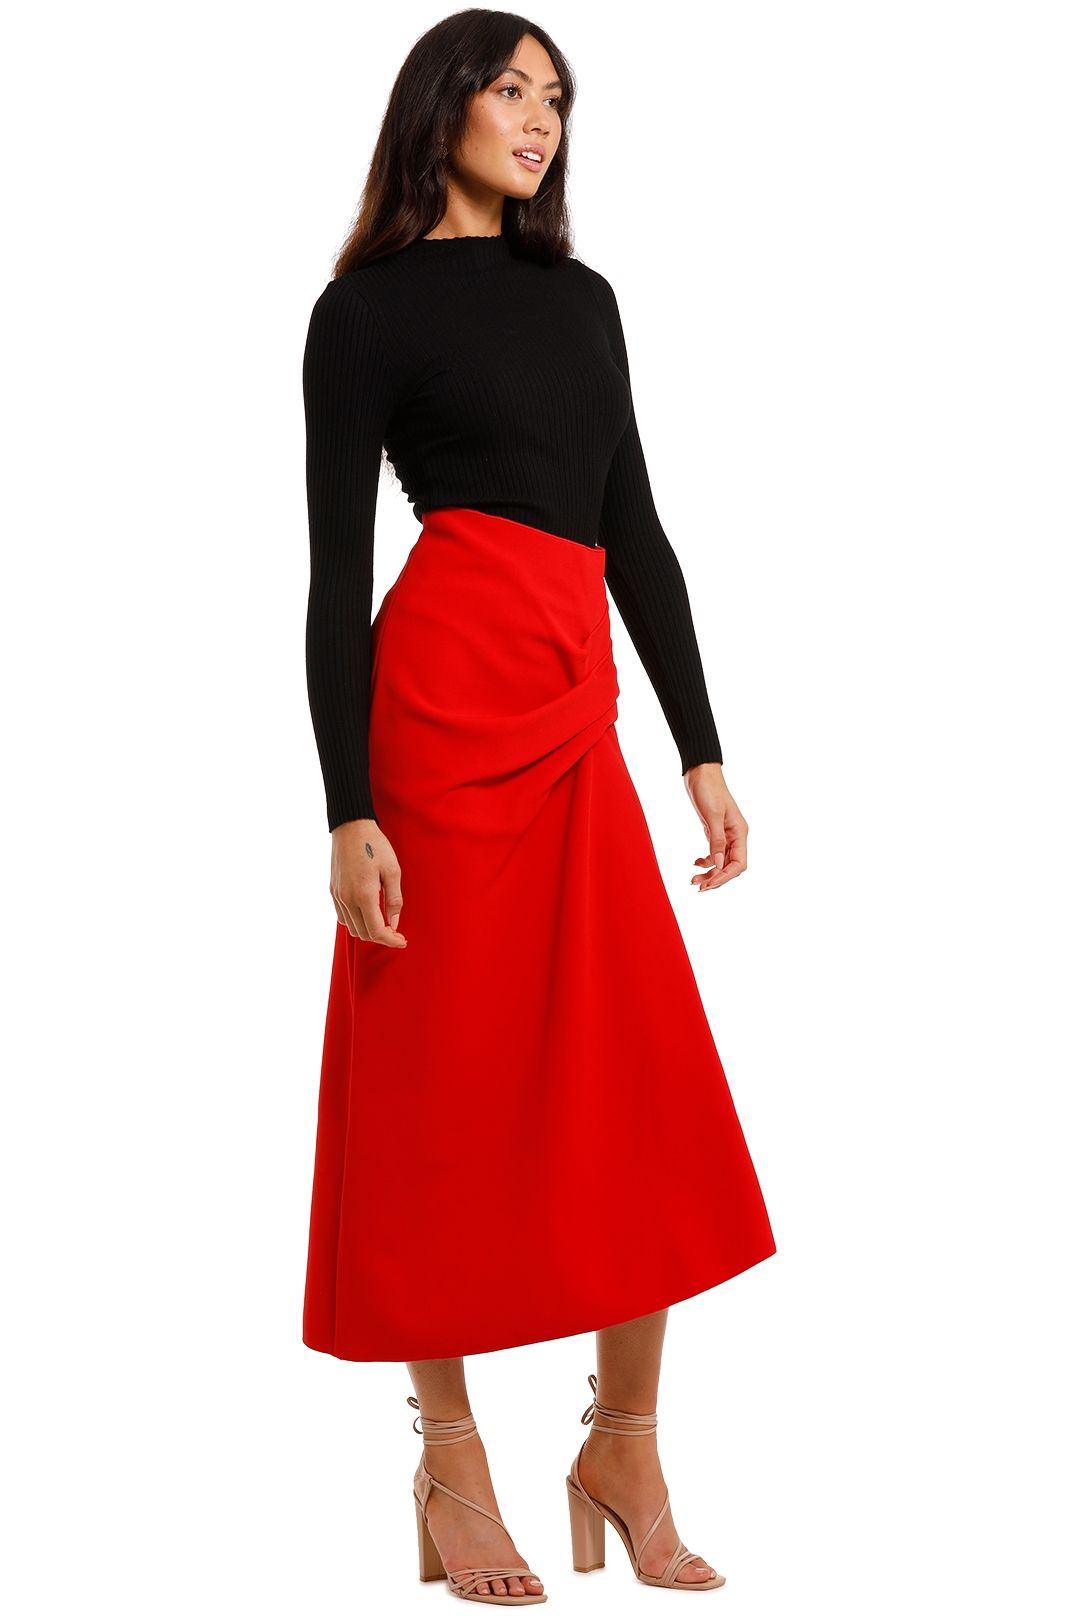 Acler Thistle Skirt Red